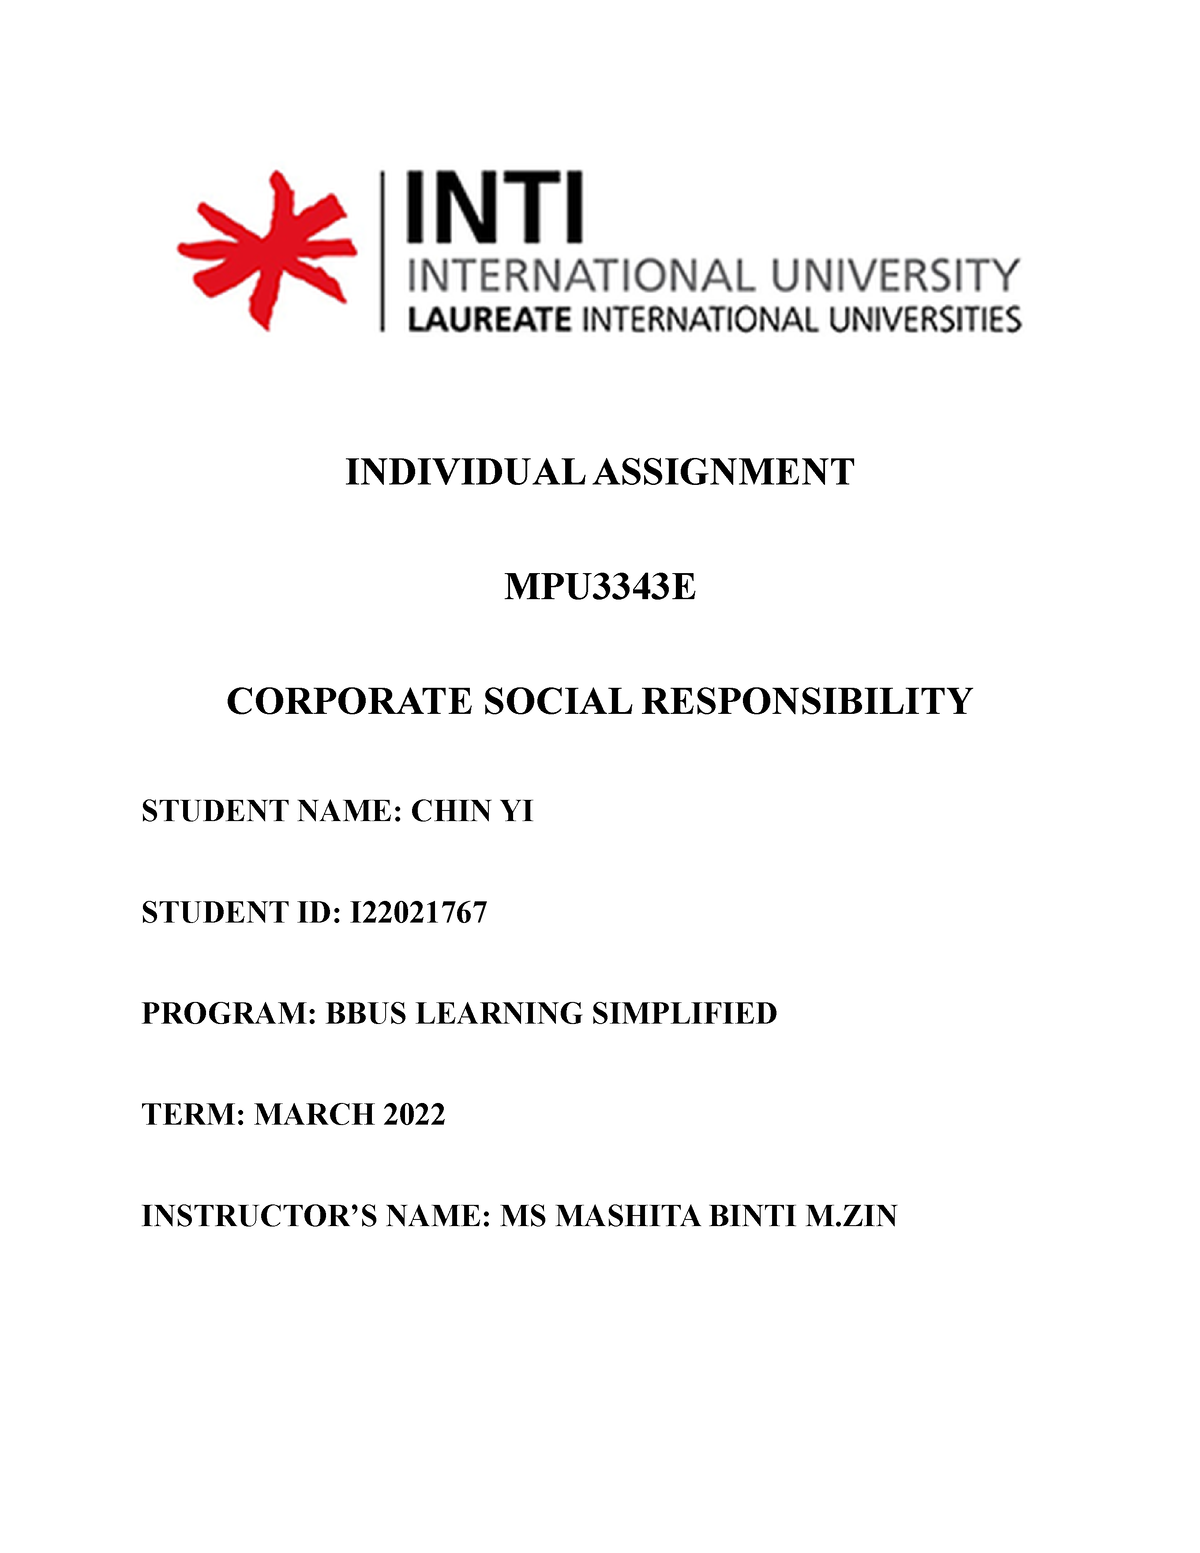 mpu 3343 corporate social responsibility individual assignment